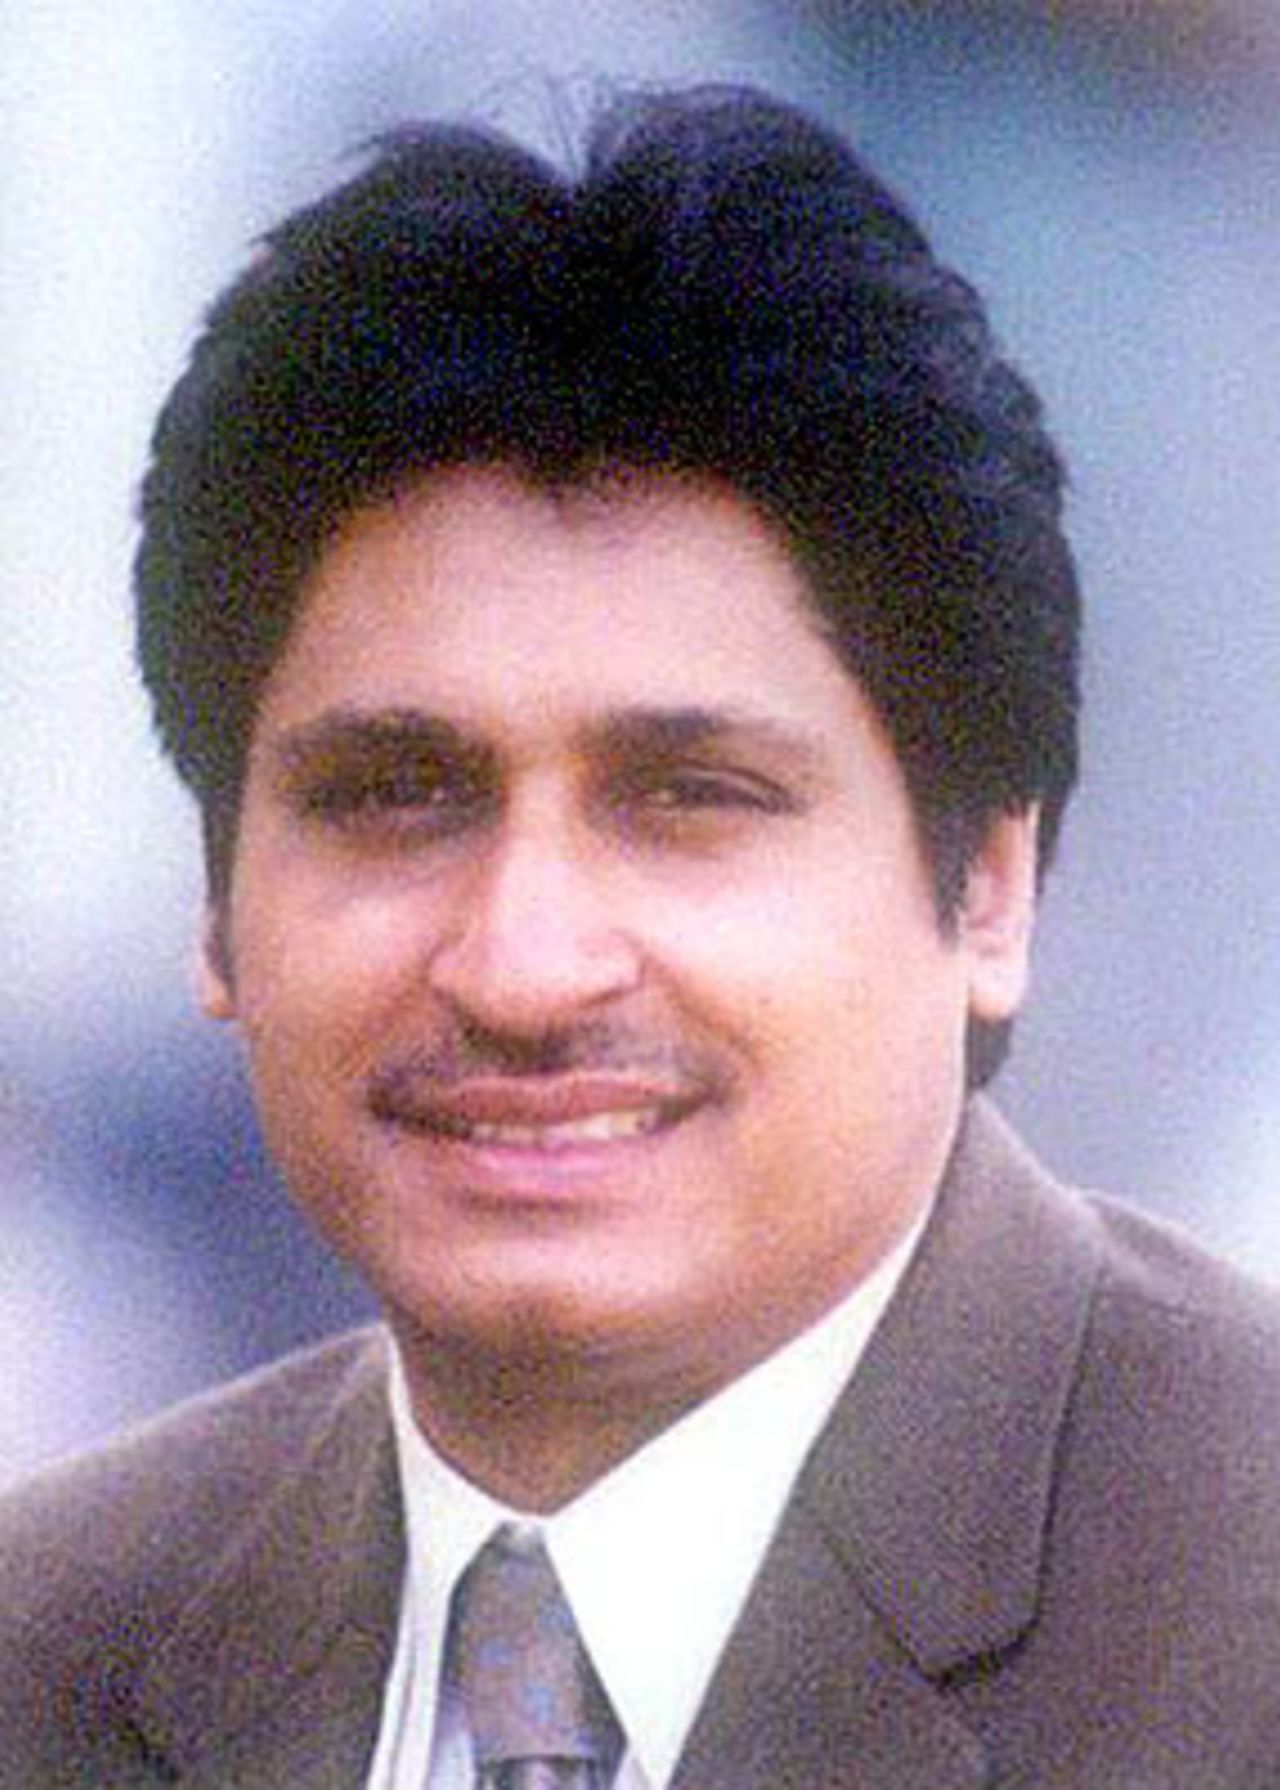 Rameez Raja - Portrait 2002